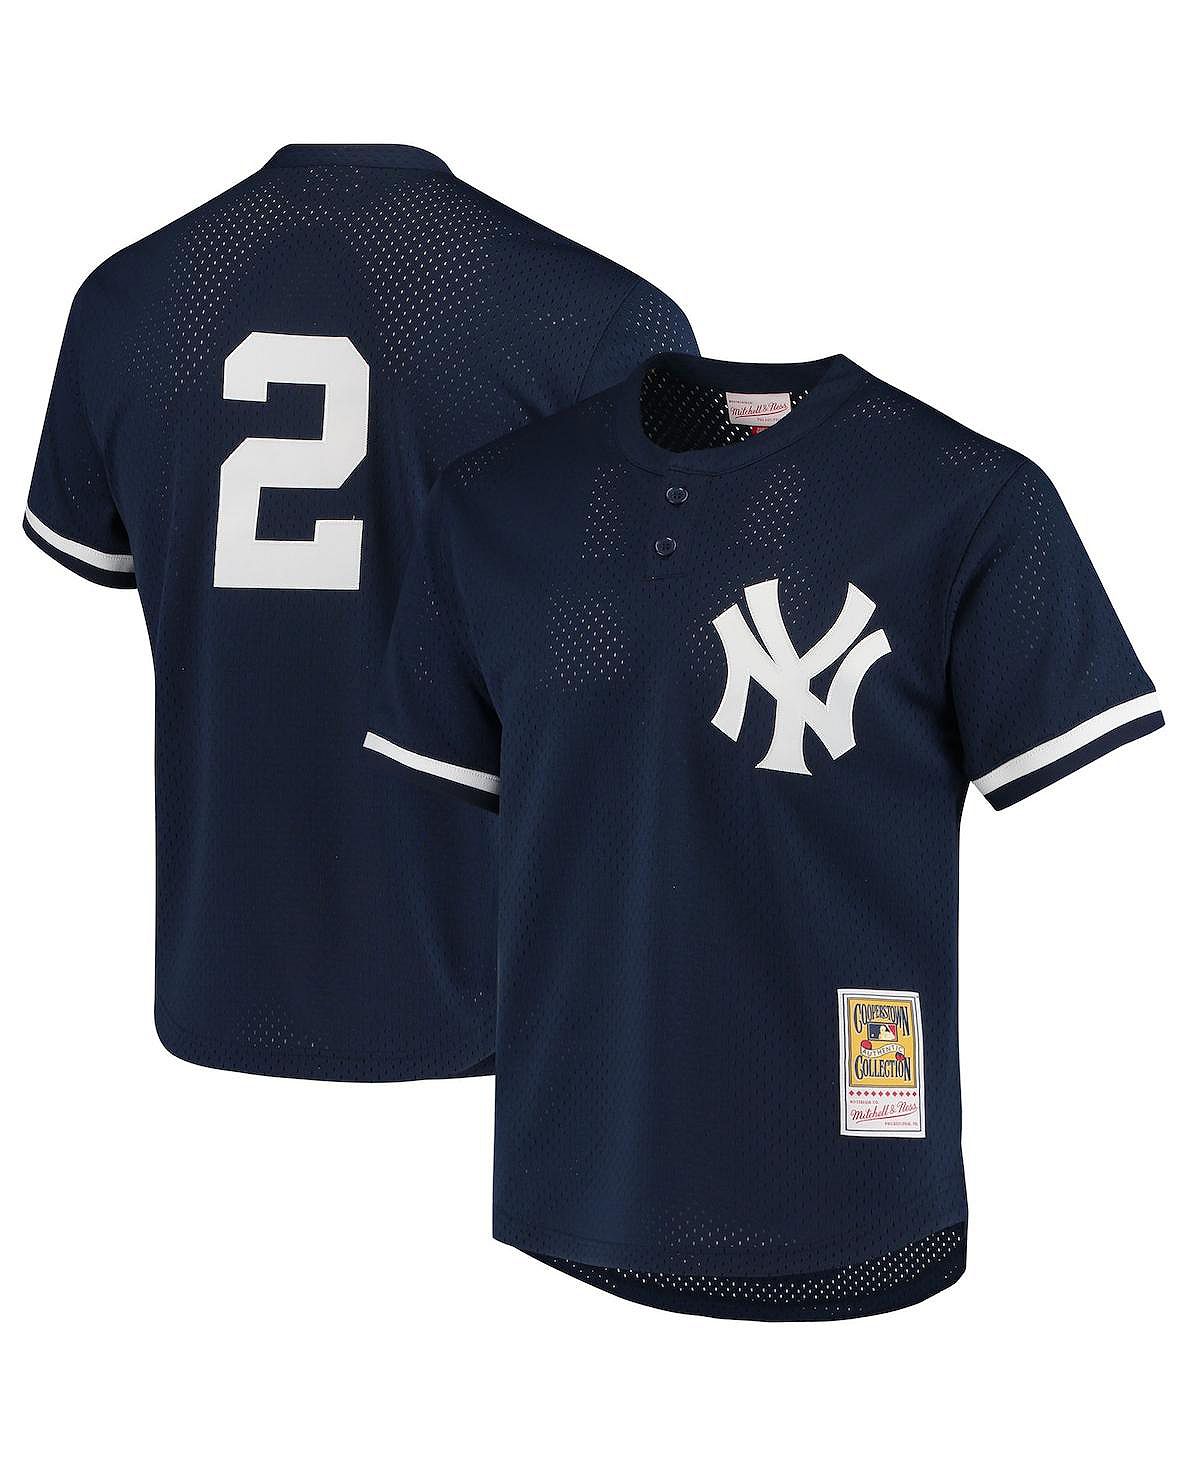 Мужская темно-синяя футболка Derek Jeter New York Yankees Cooperstown Collection 1995 года для тренировок ватин Mitchell & Ness